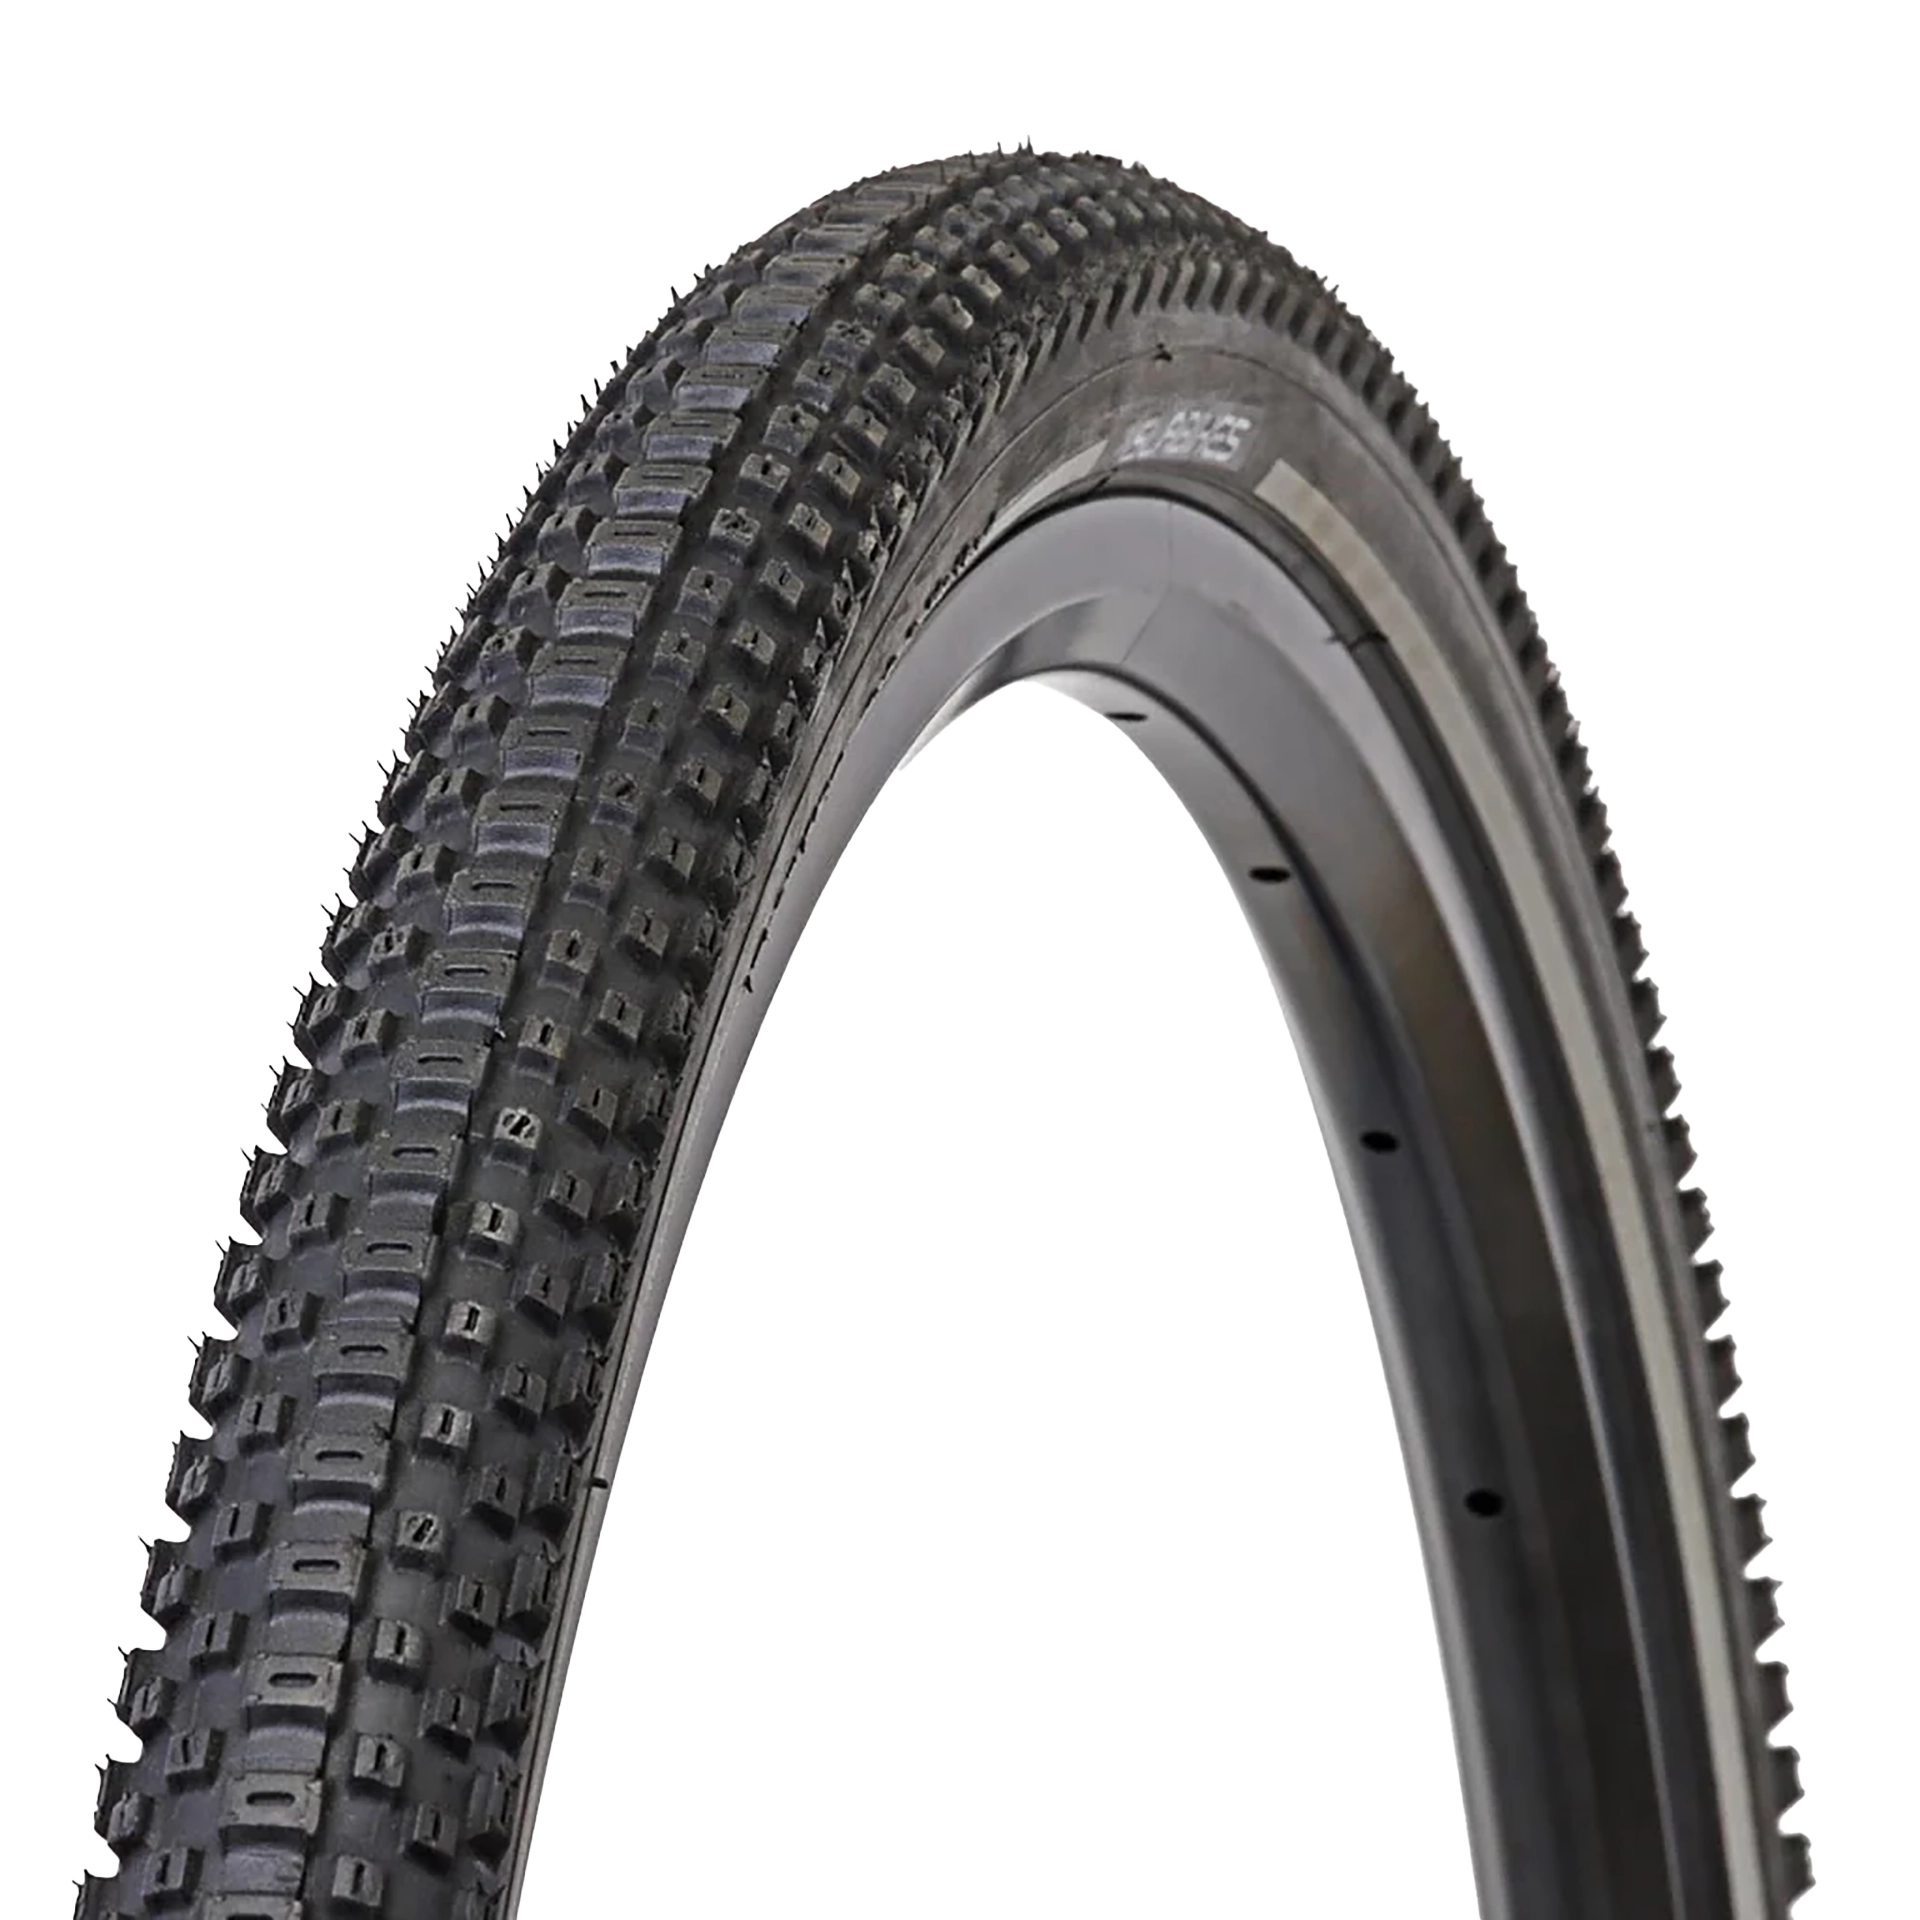 Tyre, Mixte multisurface tread, 700x35c (35-622), Luath 700, Luath XS/S/M, Janis, eJanis